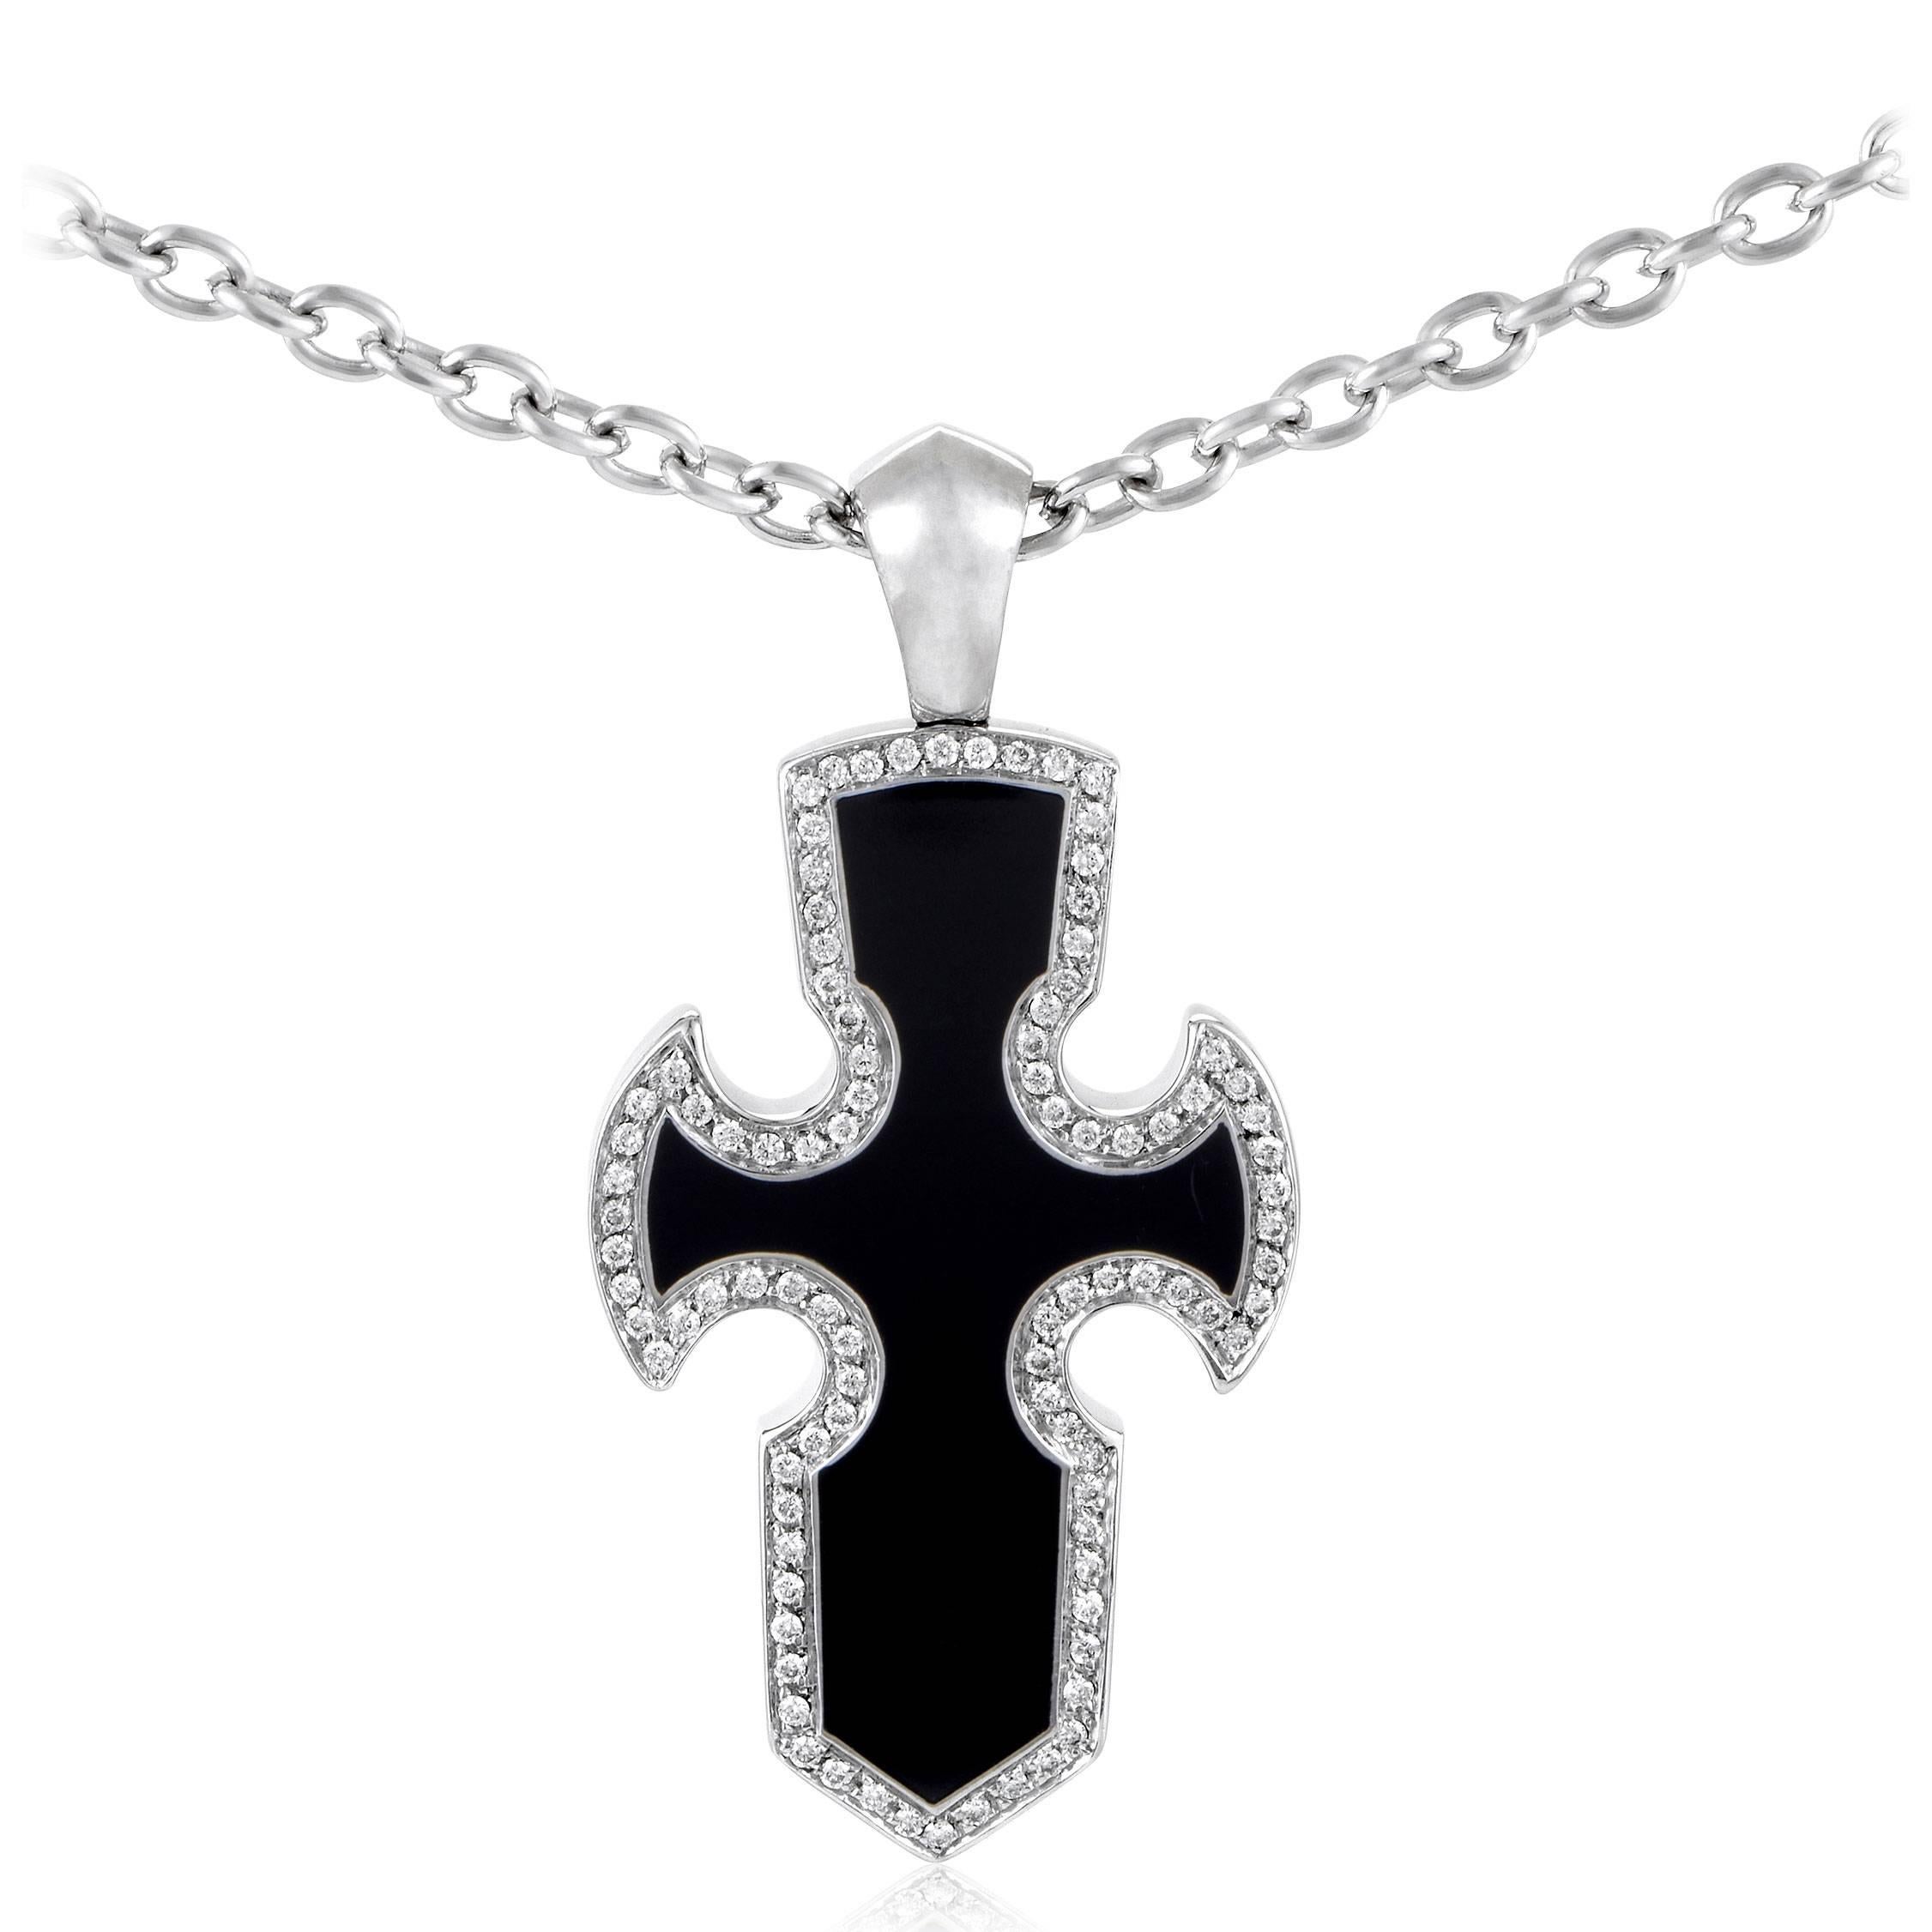 Gavello Gotham White Gold Diamond and Onyx Cross Pendant Necklace